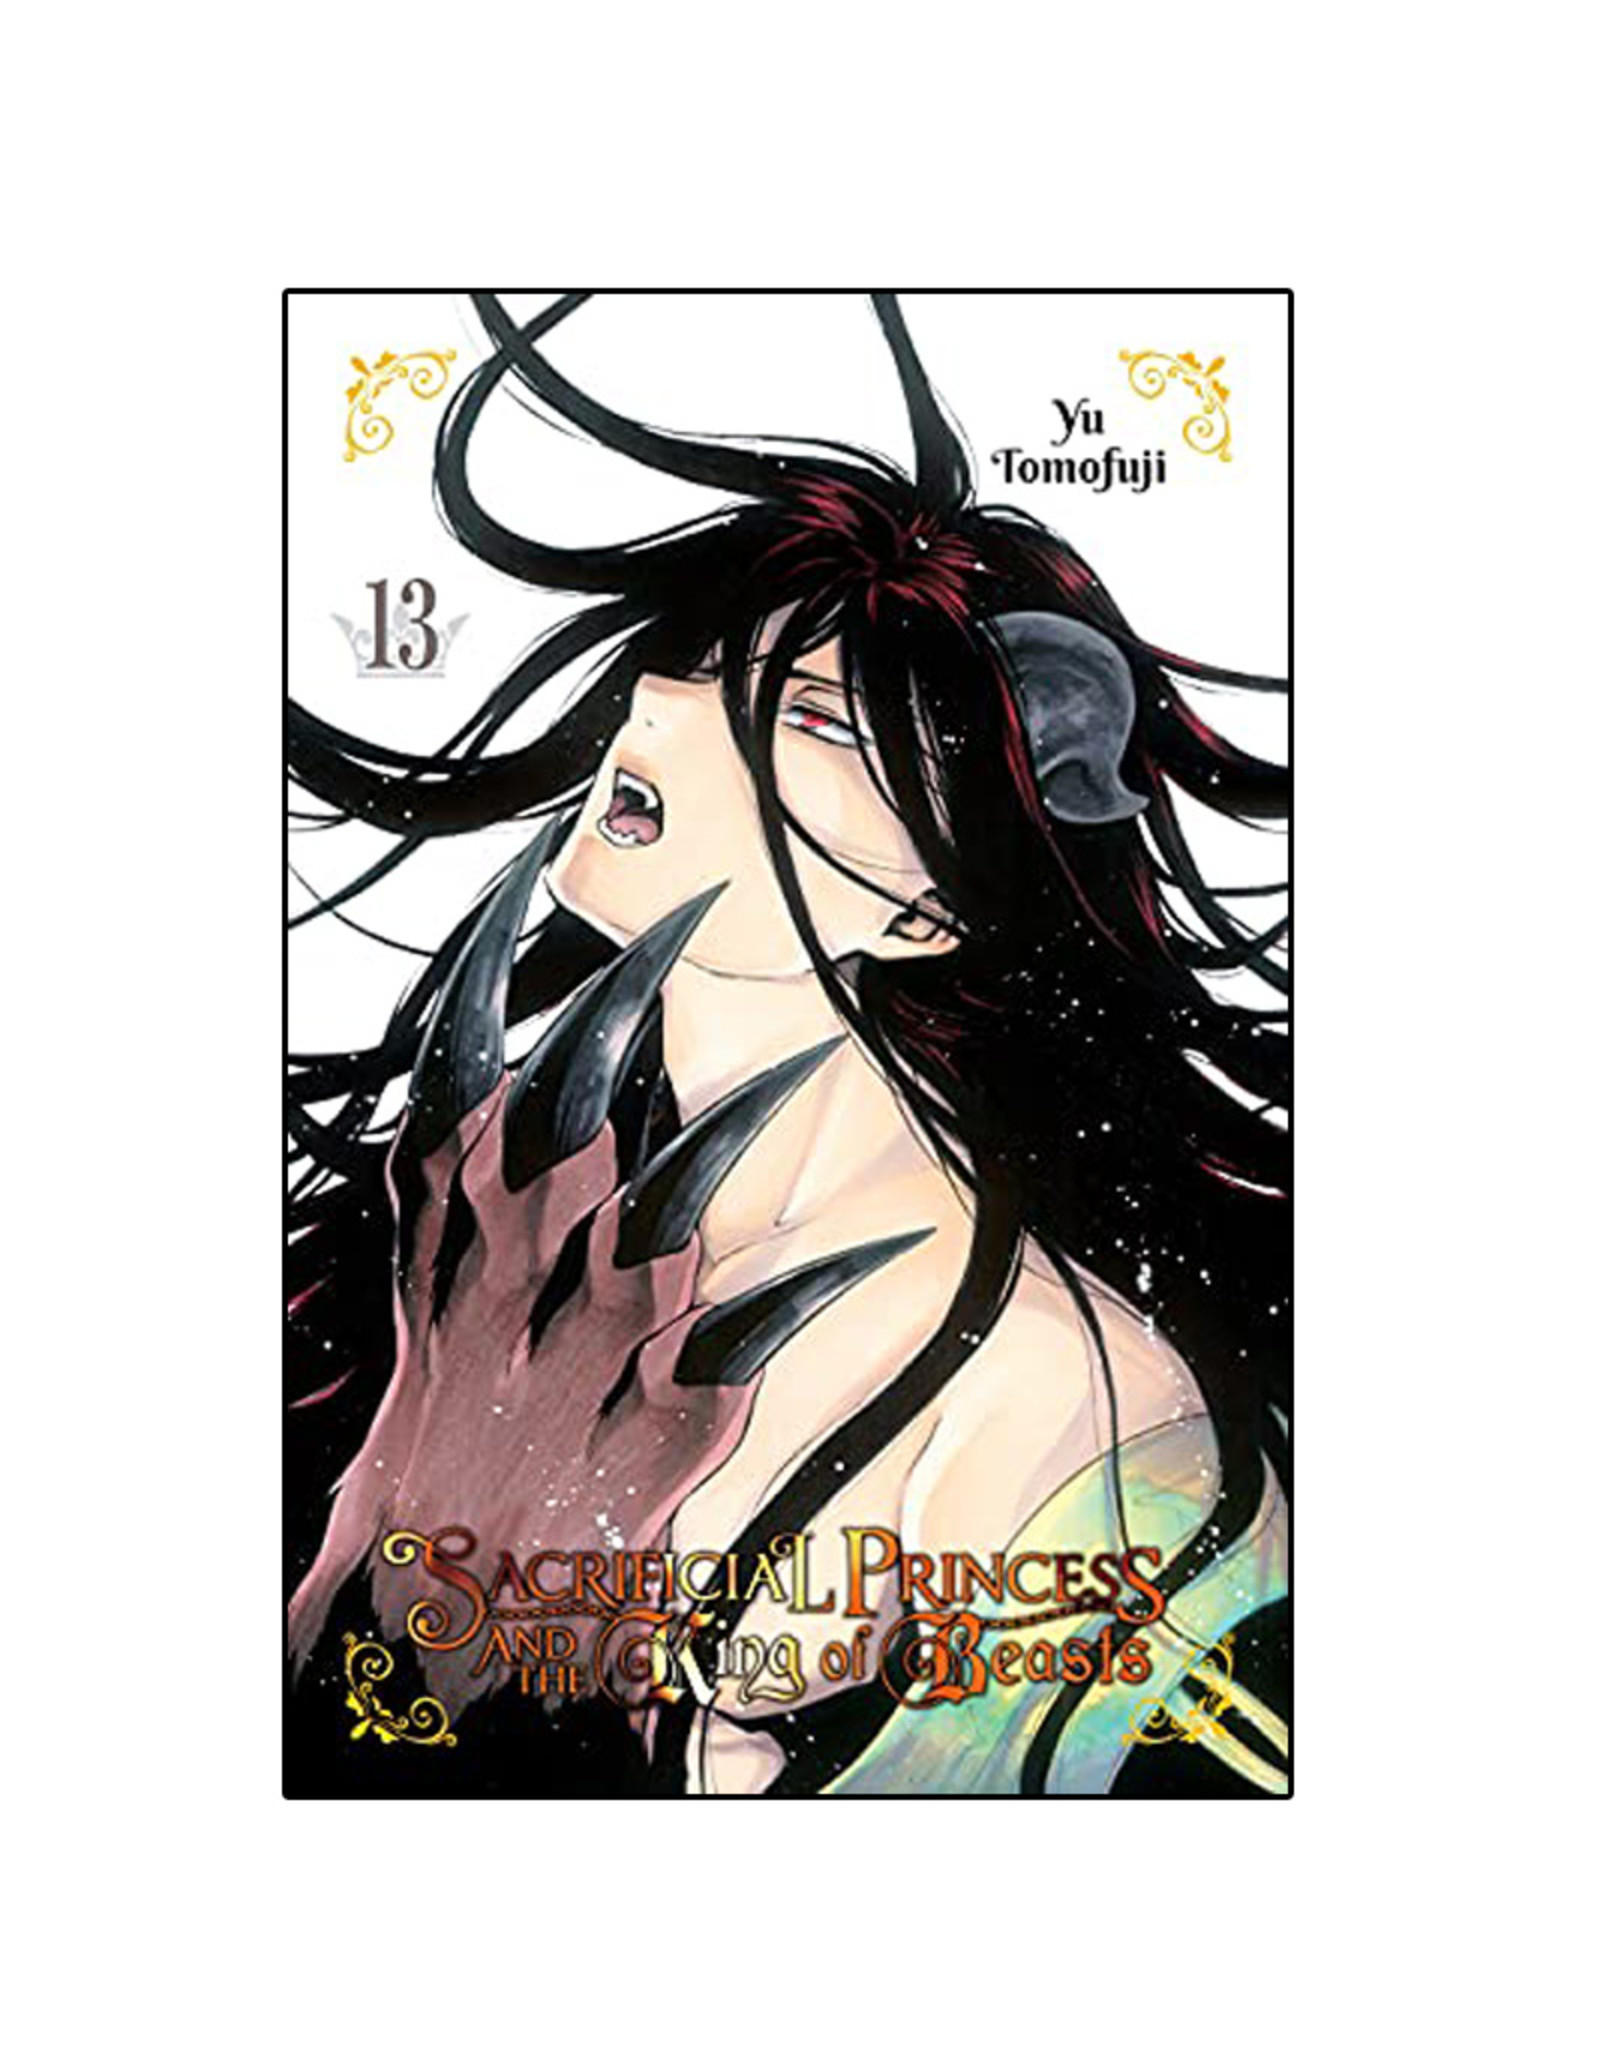 Yen Press Sacrificial Princess  & King of Beasts Volume 13